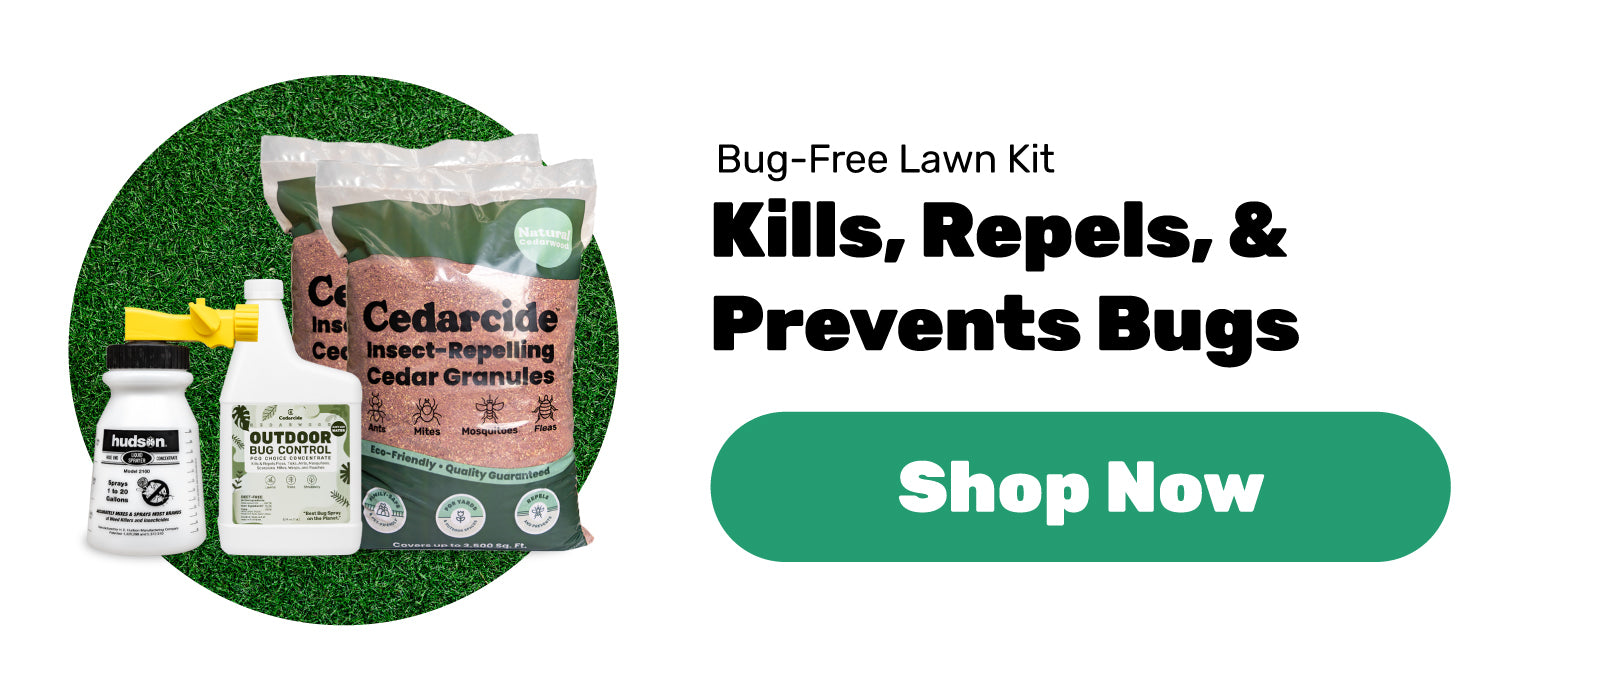 Cedarcide Bug-Free Lawn Kit